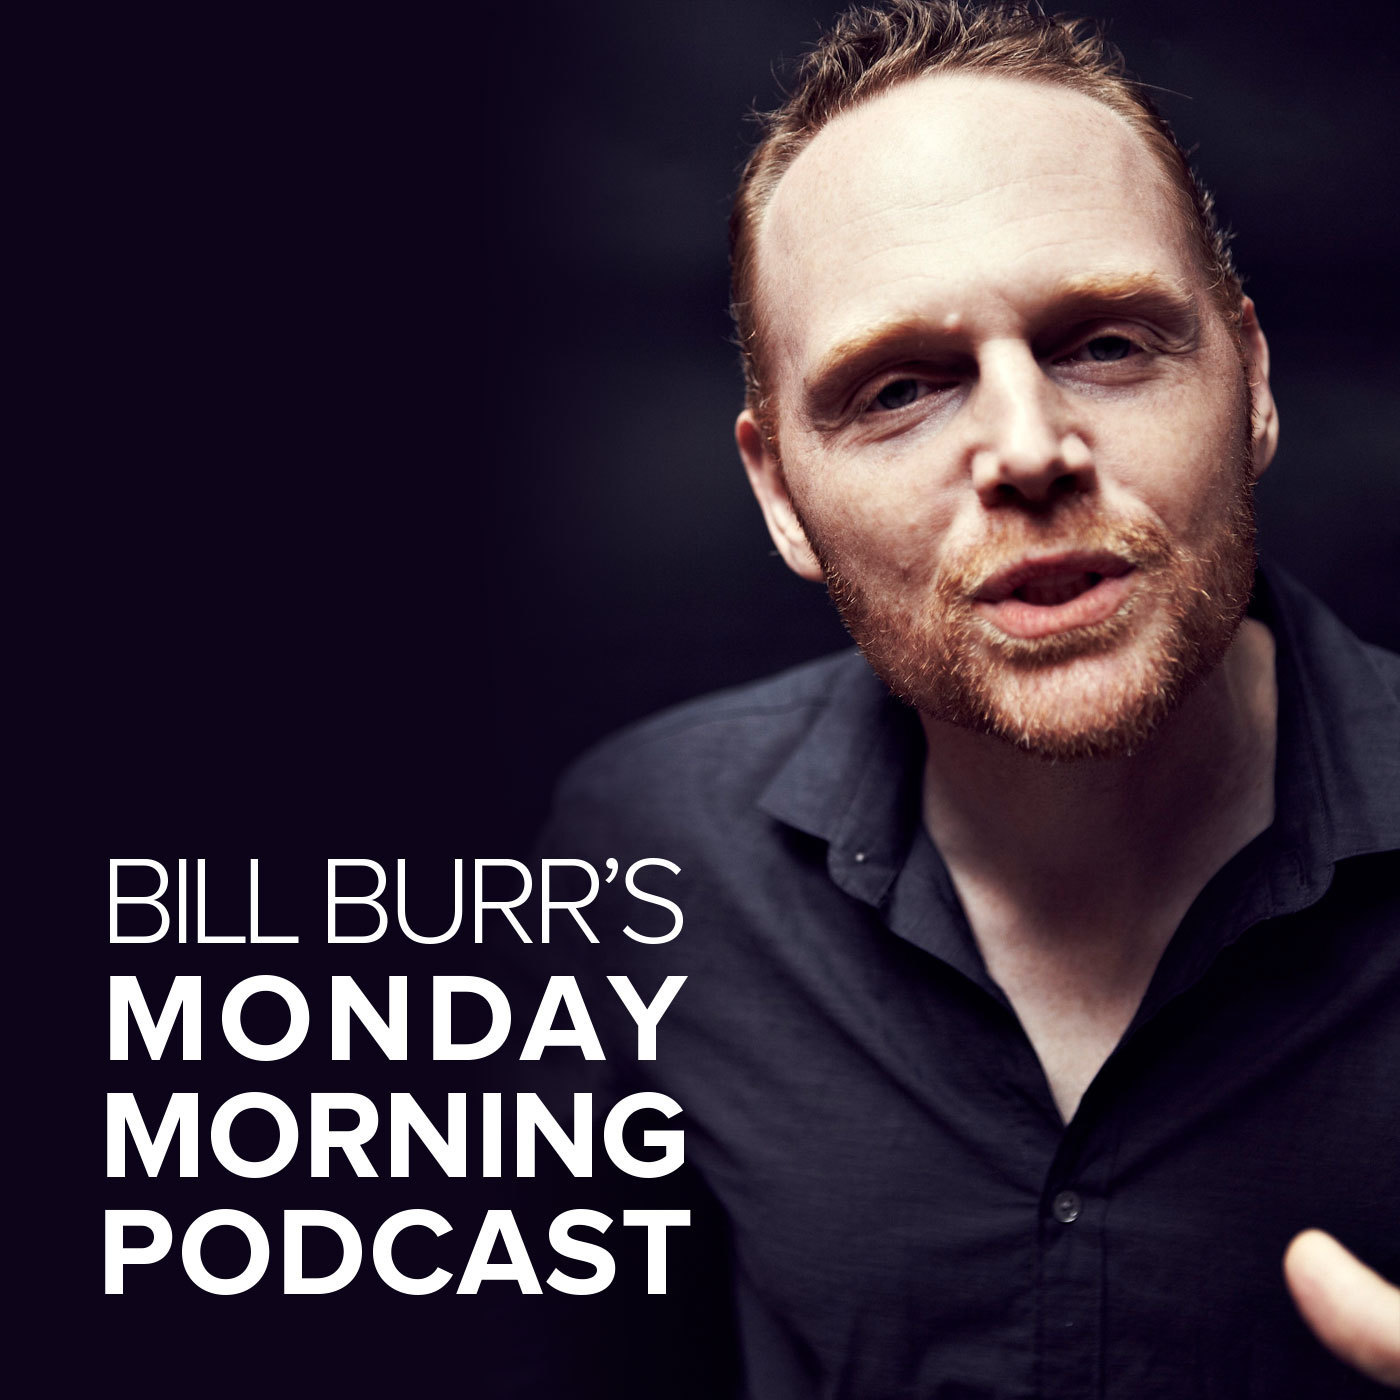 Monday Morning Podcast 3-21-16